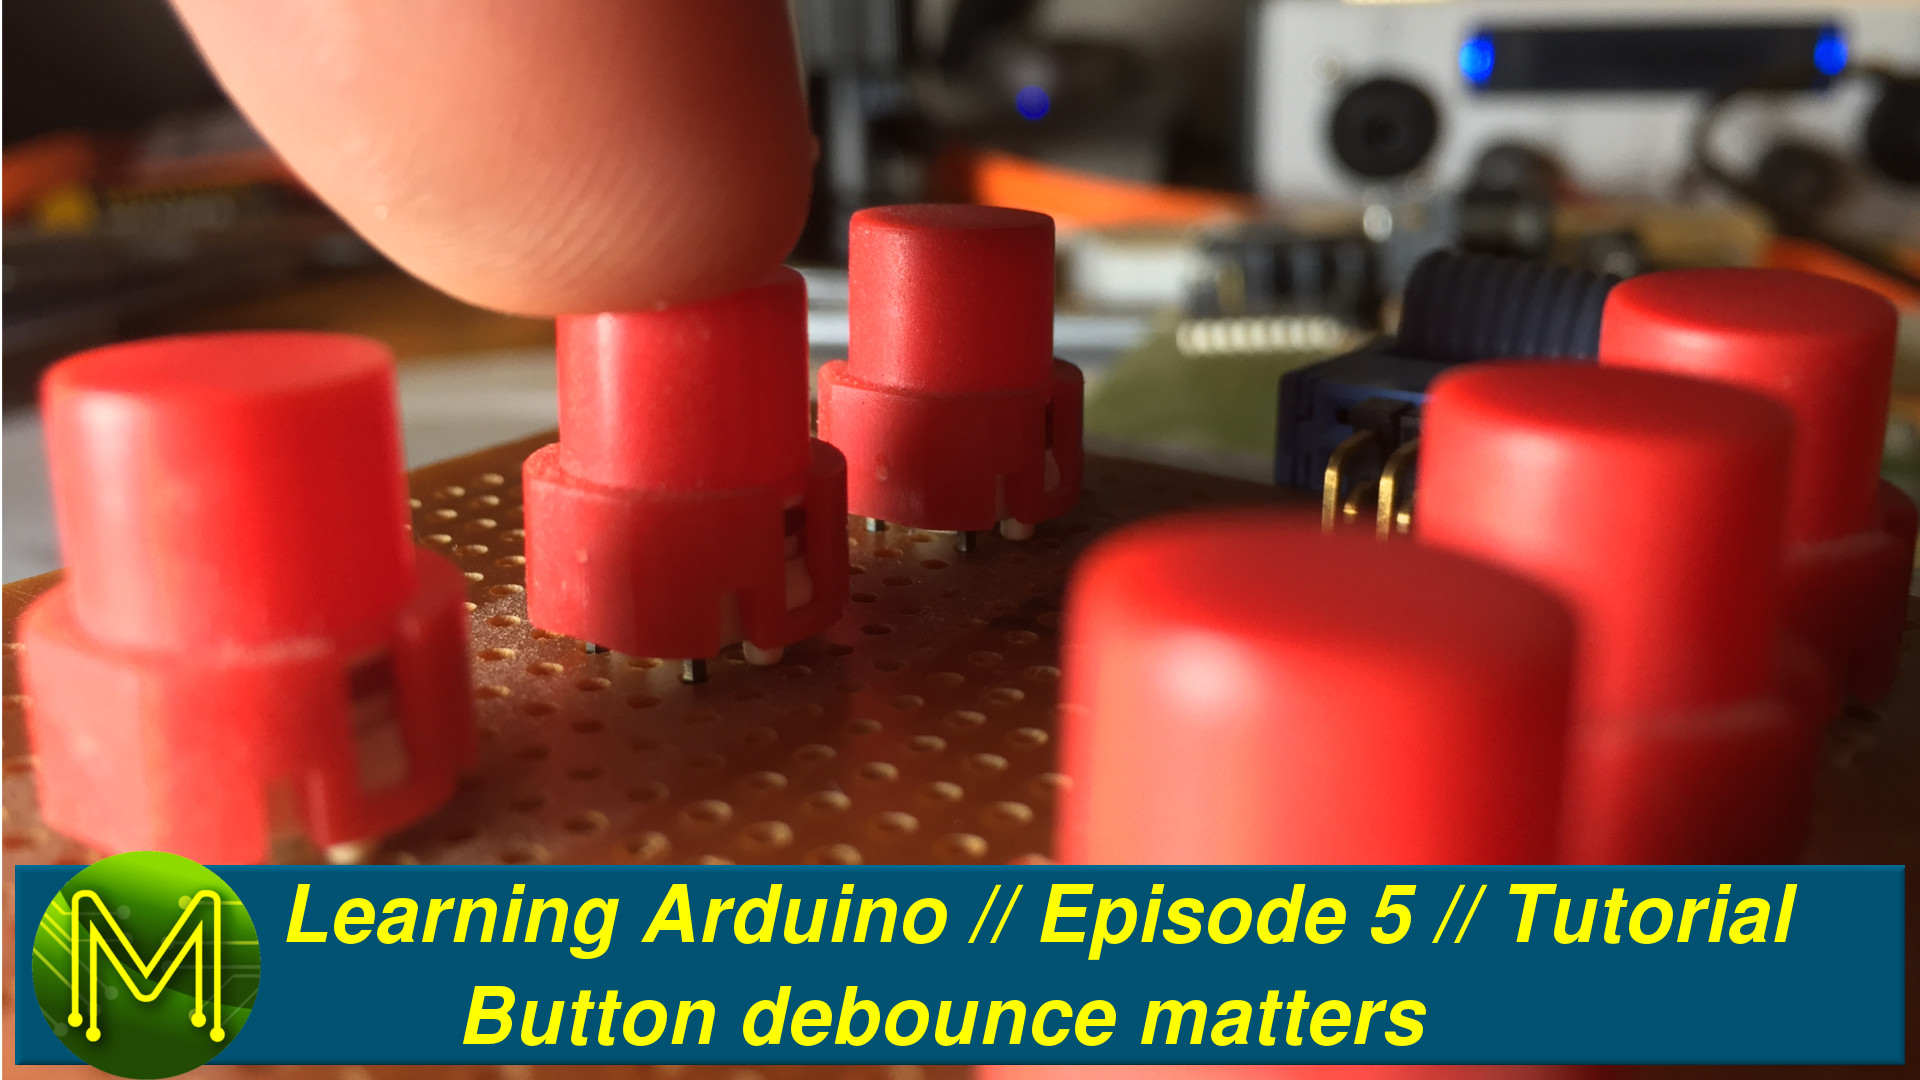 Learning Arduino: Button debounce matters // Episode 5 // Tutorial